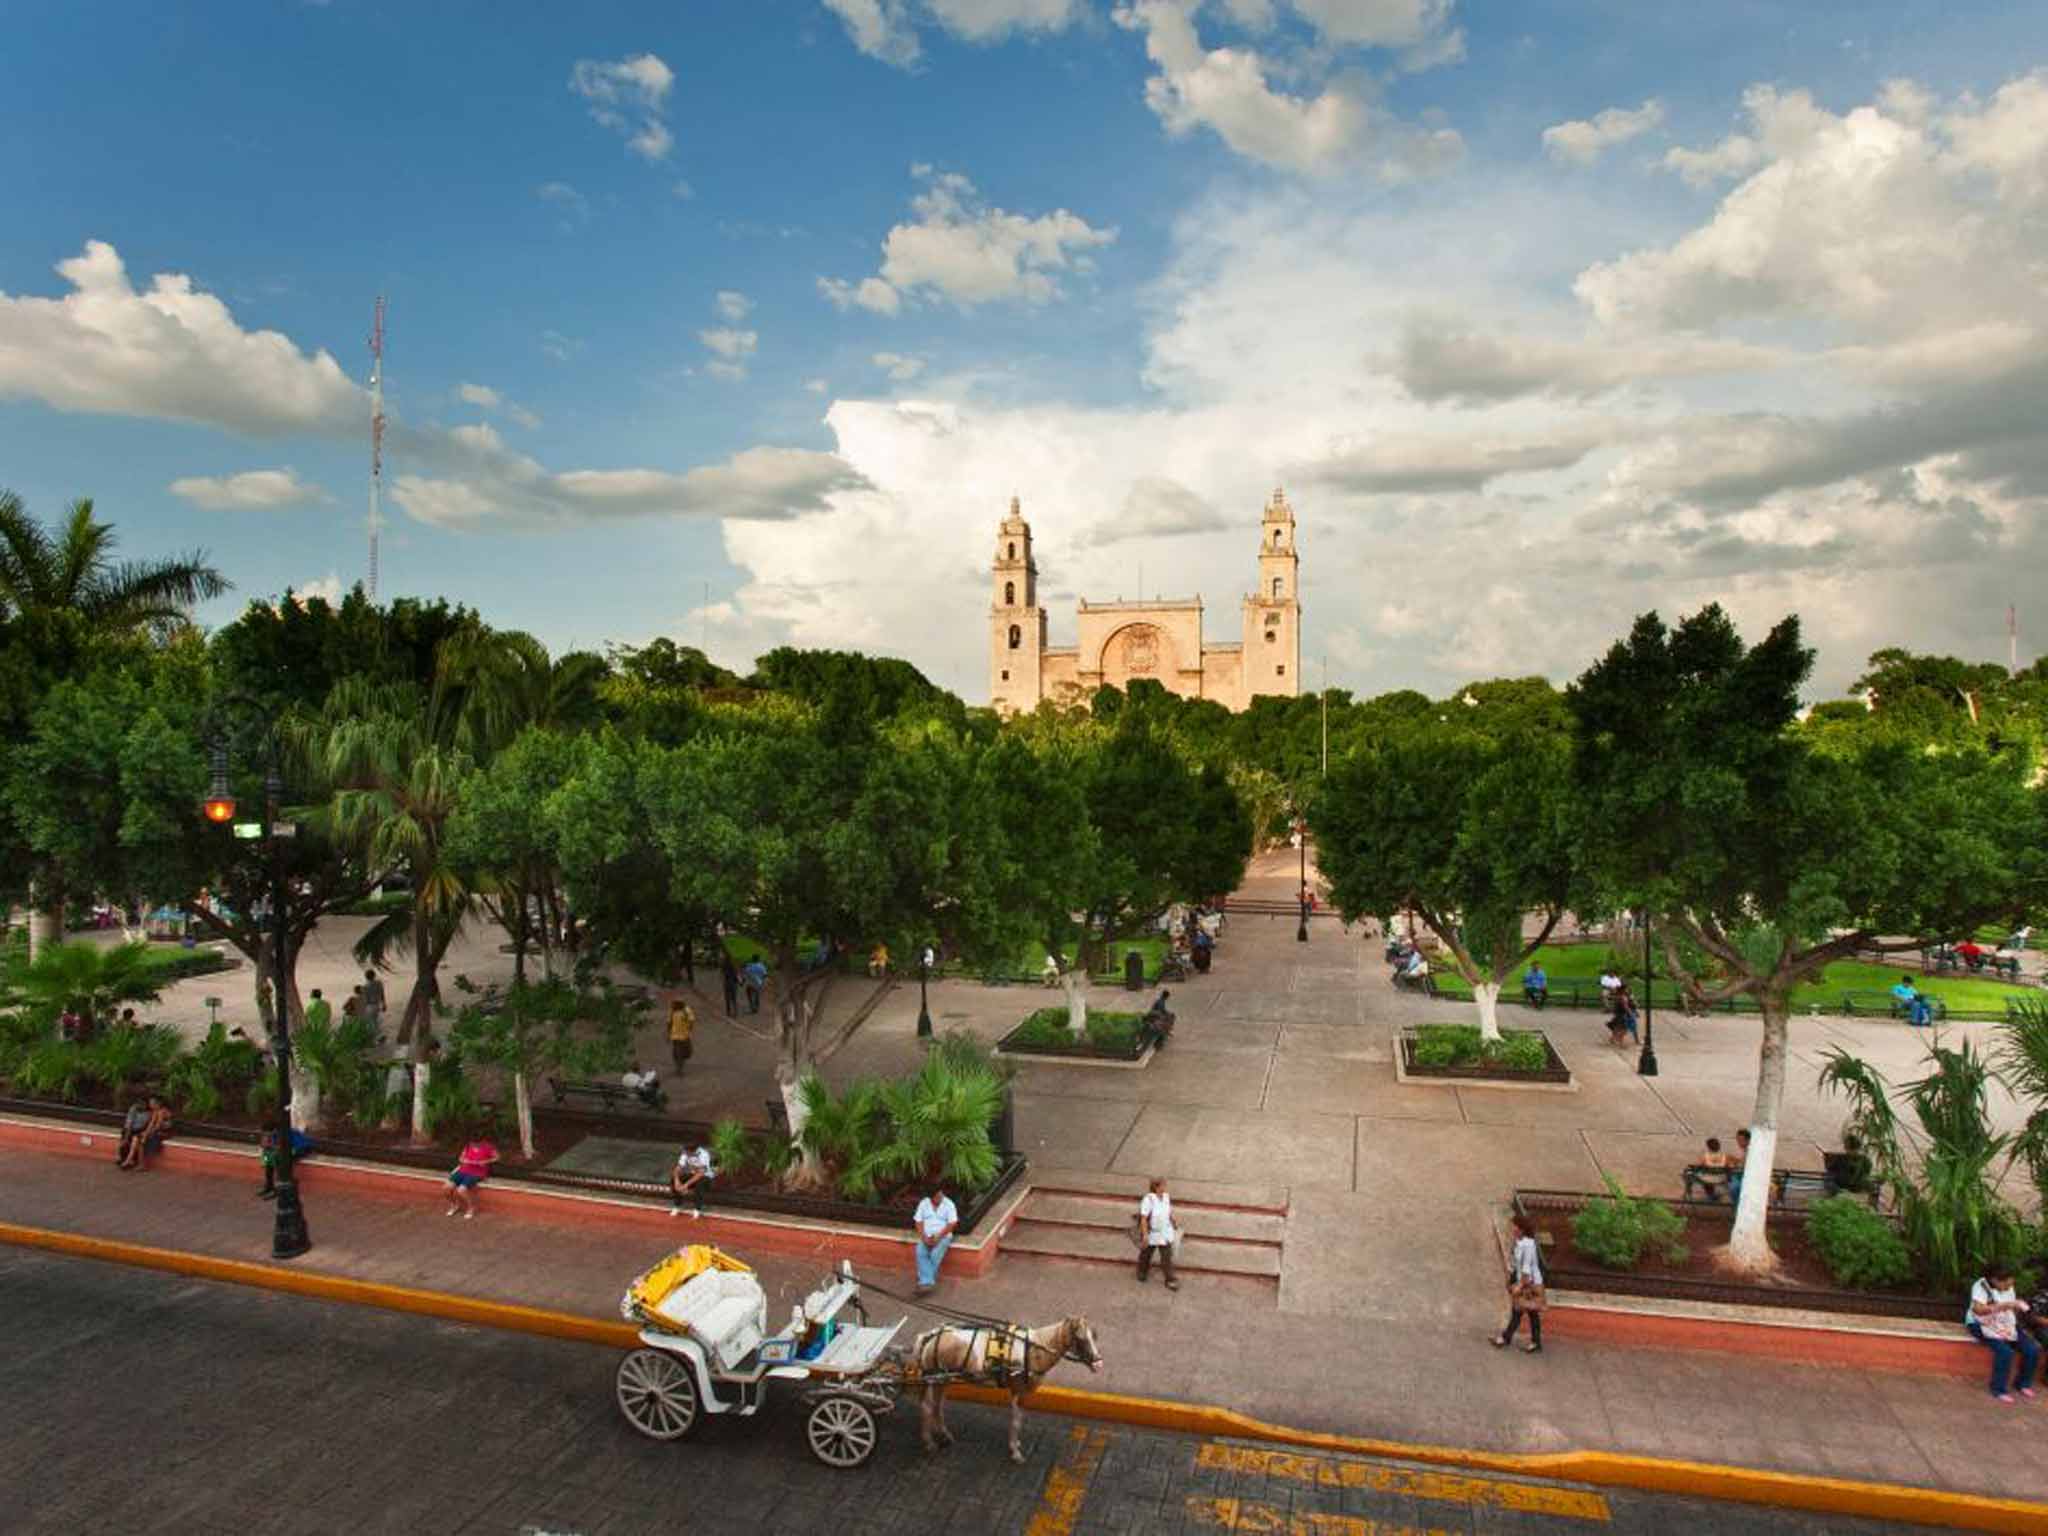 Mérida marvels: Plaza Grande